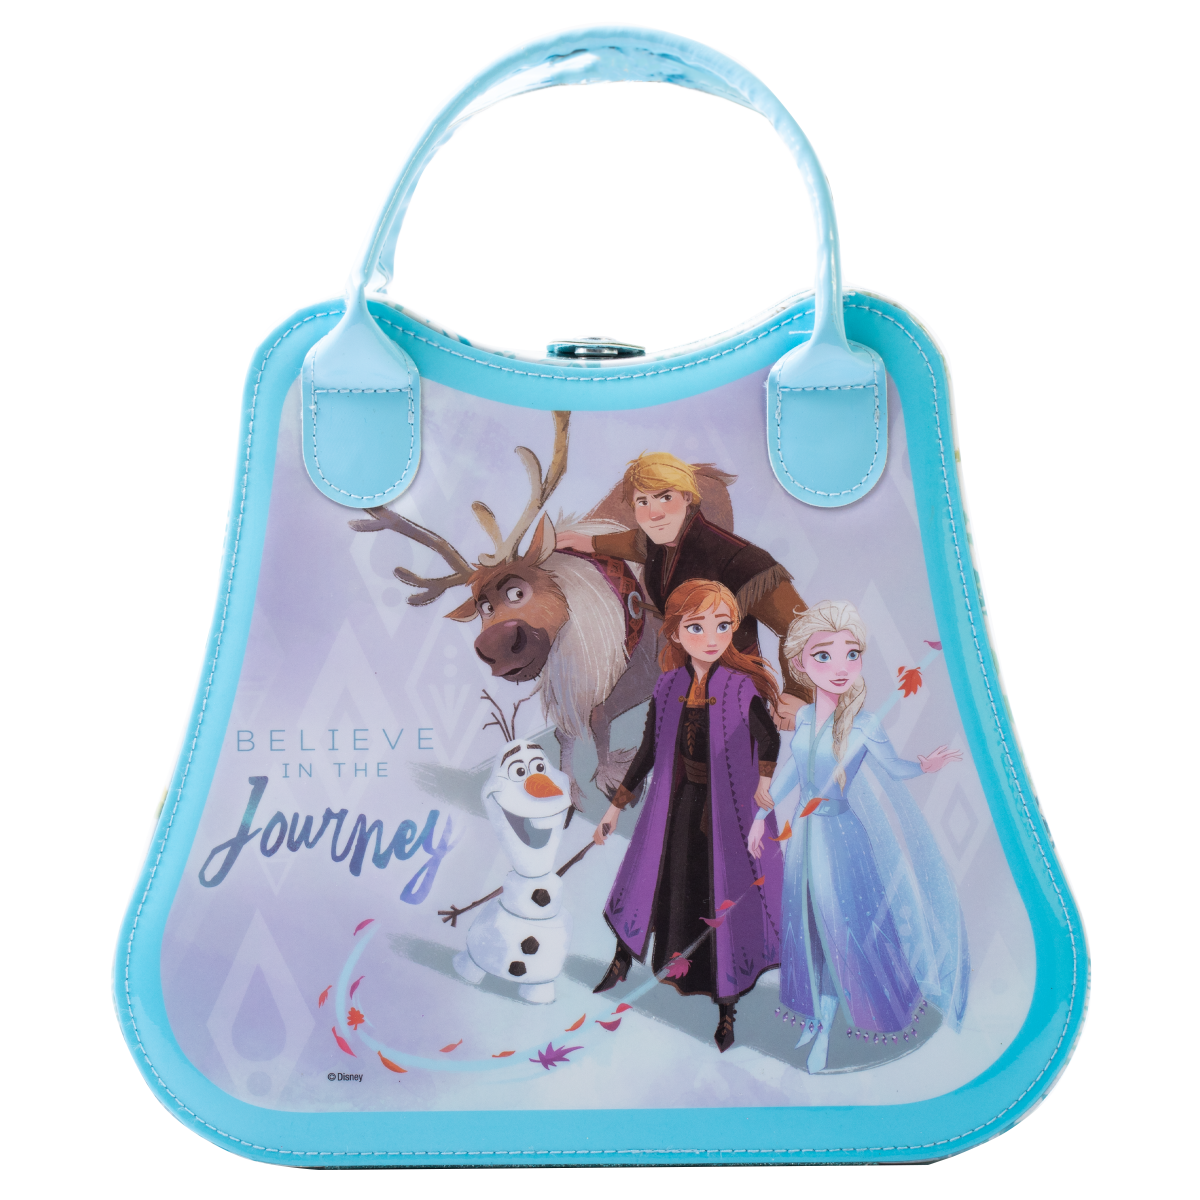 SHOP: New Frozen Dooney & Bourke Purses Arrive on shopDisney - Disneyland  News Today